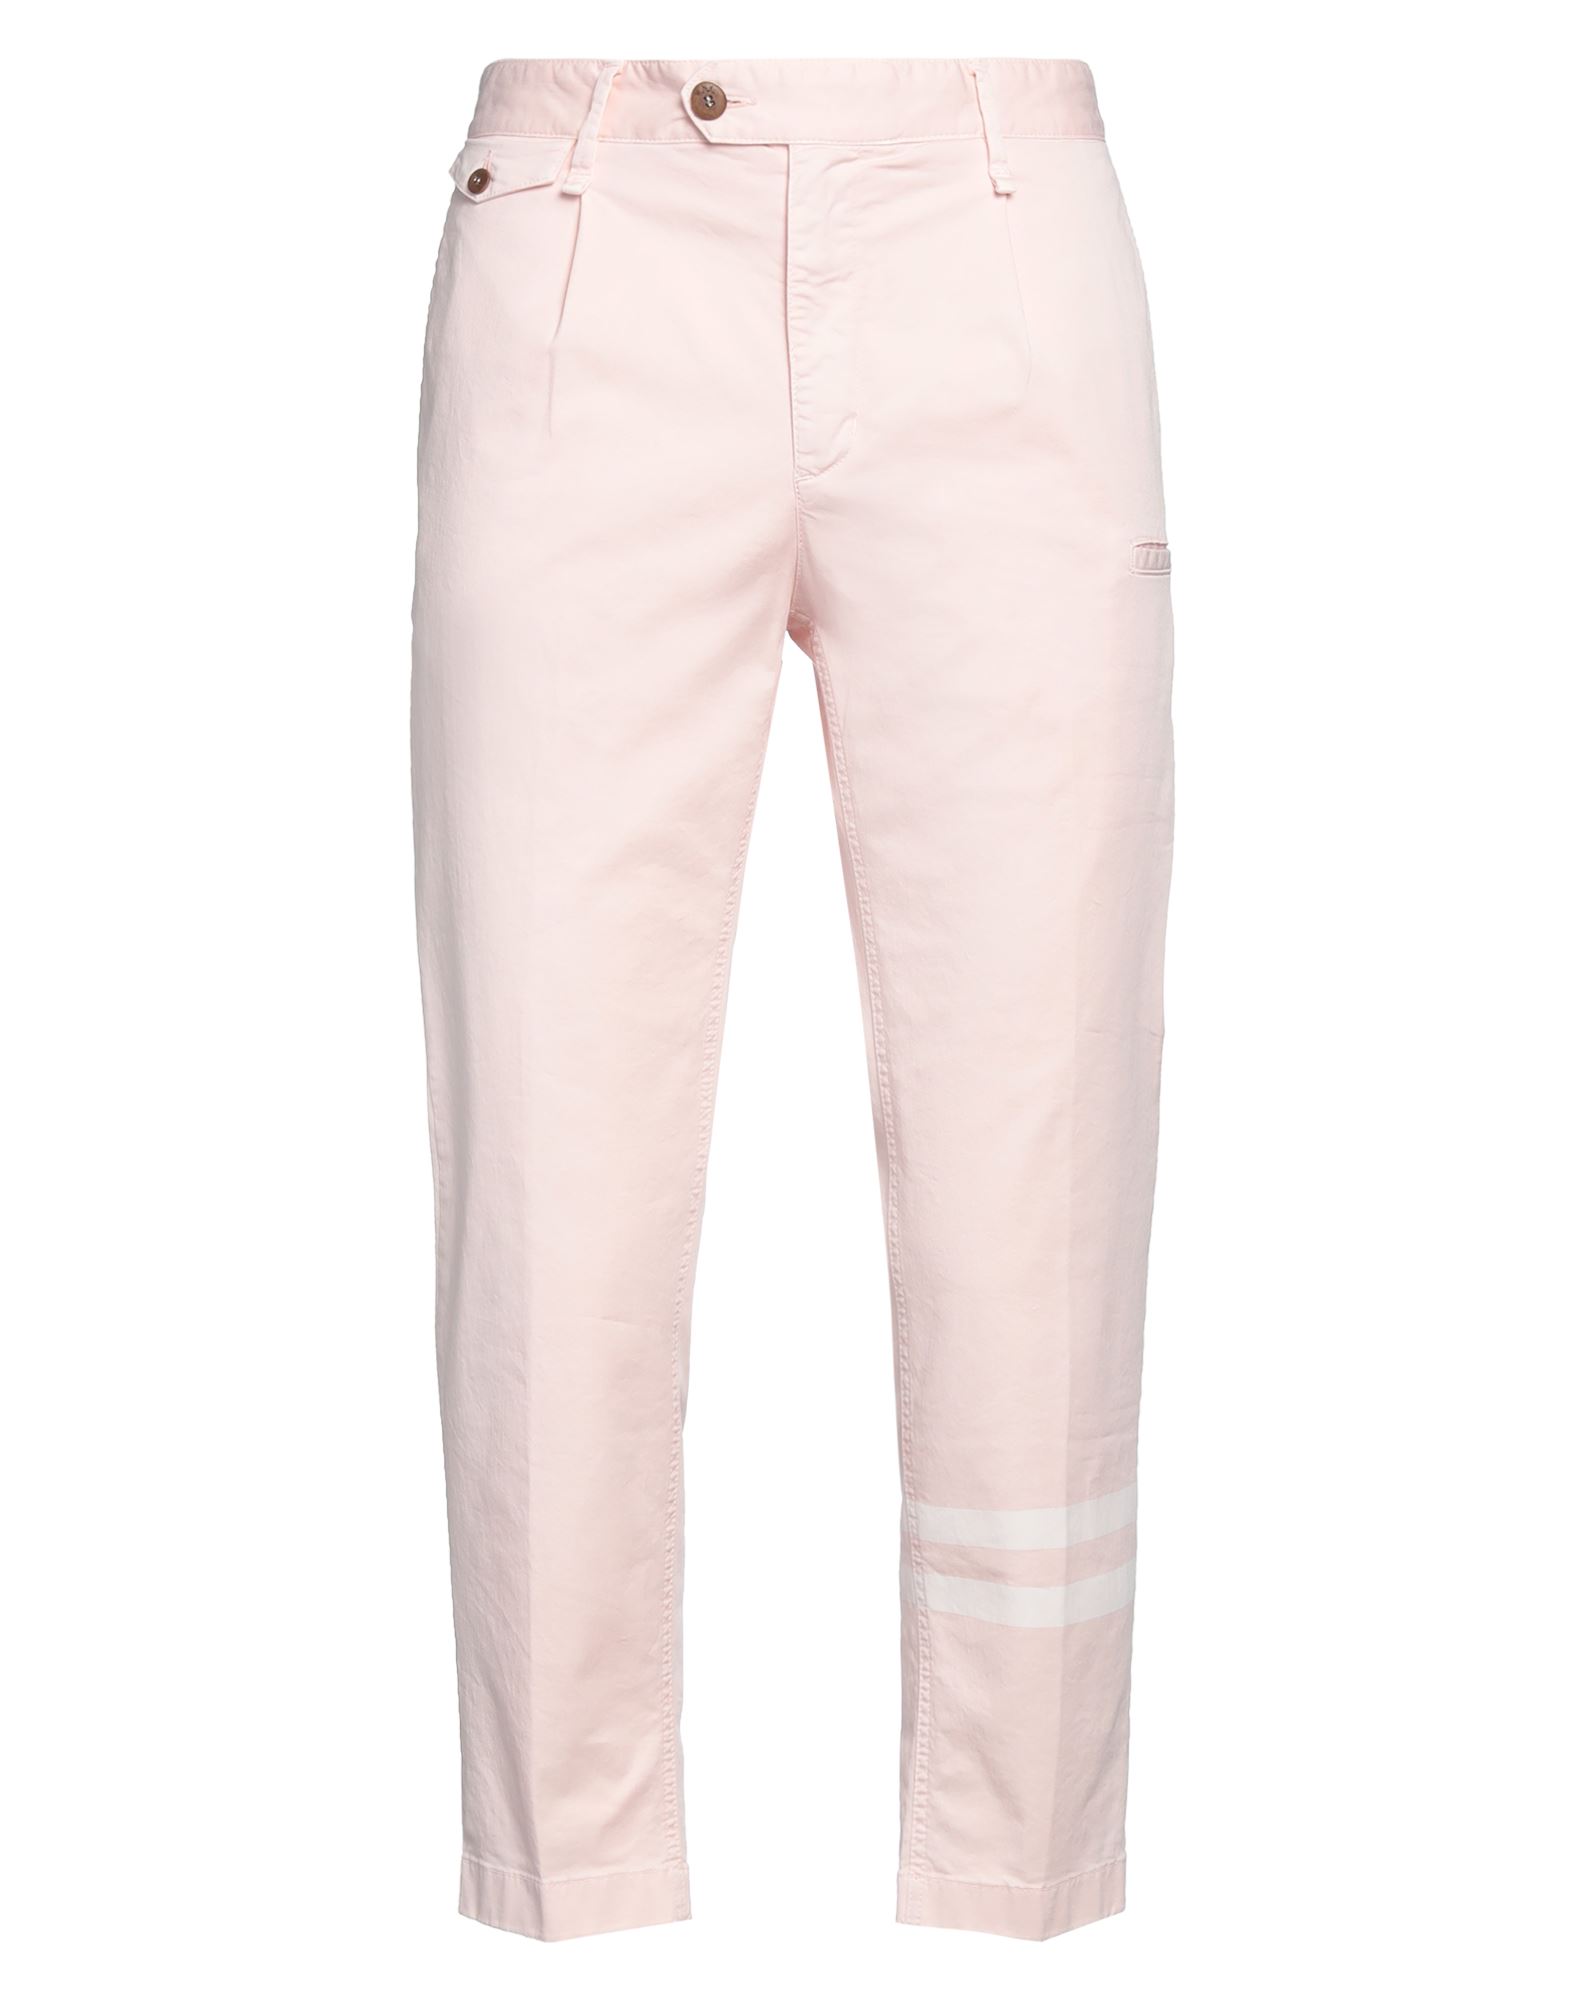 W N Y White Navy Yellow Pants In Pink